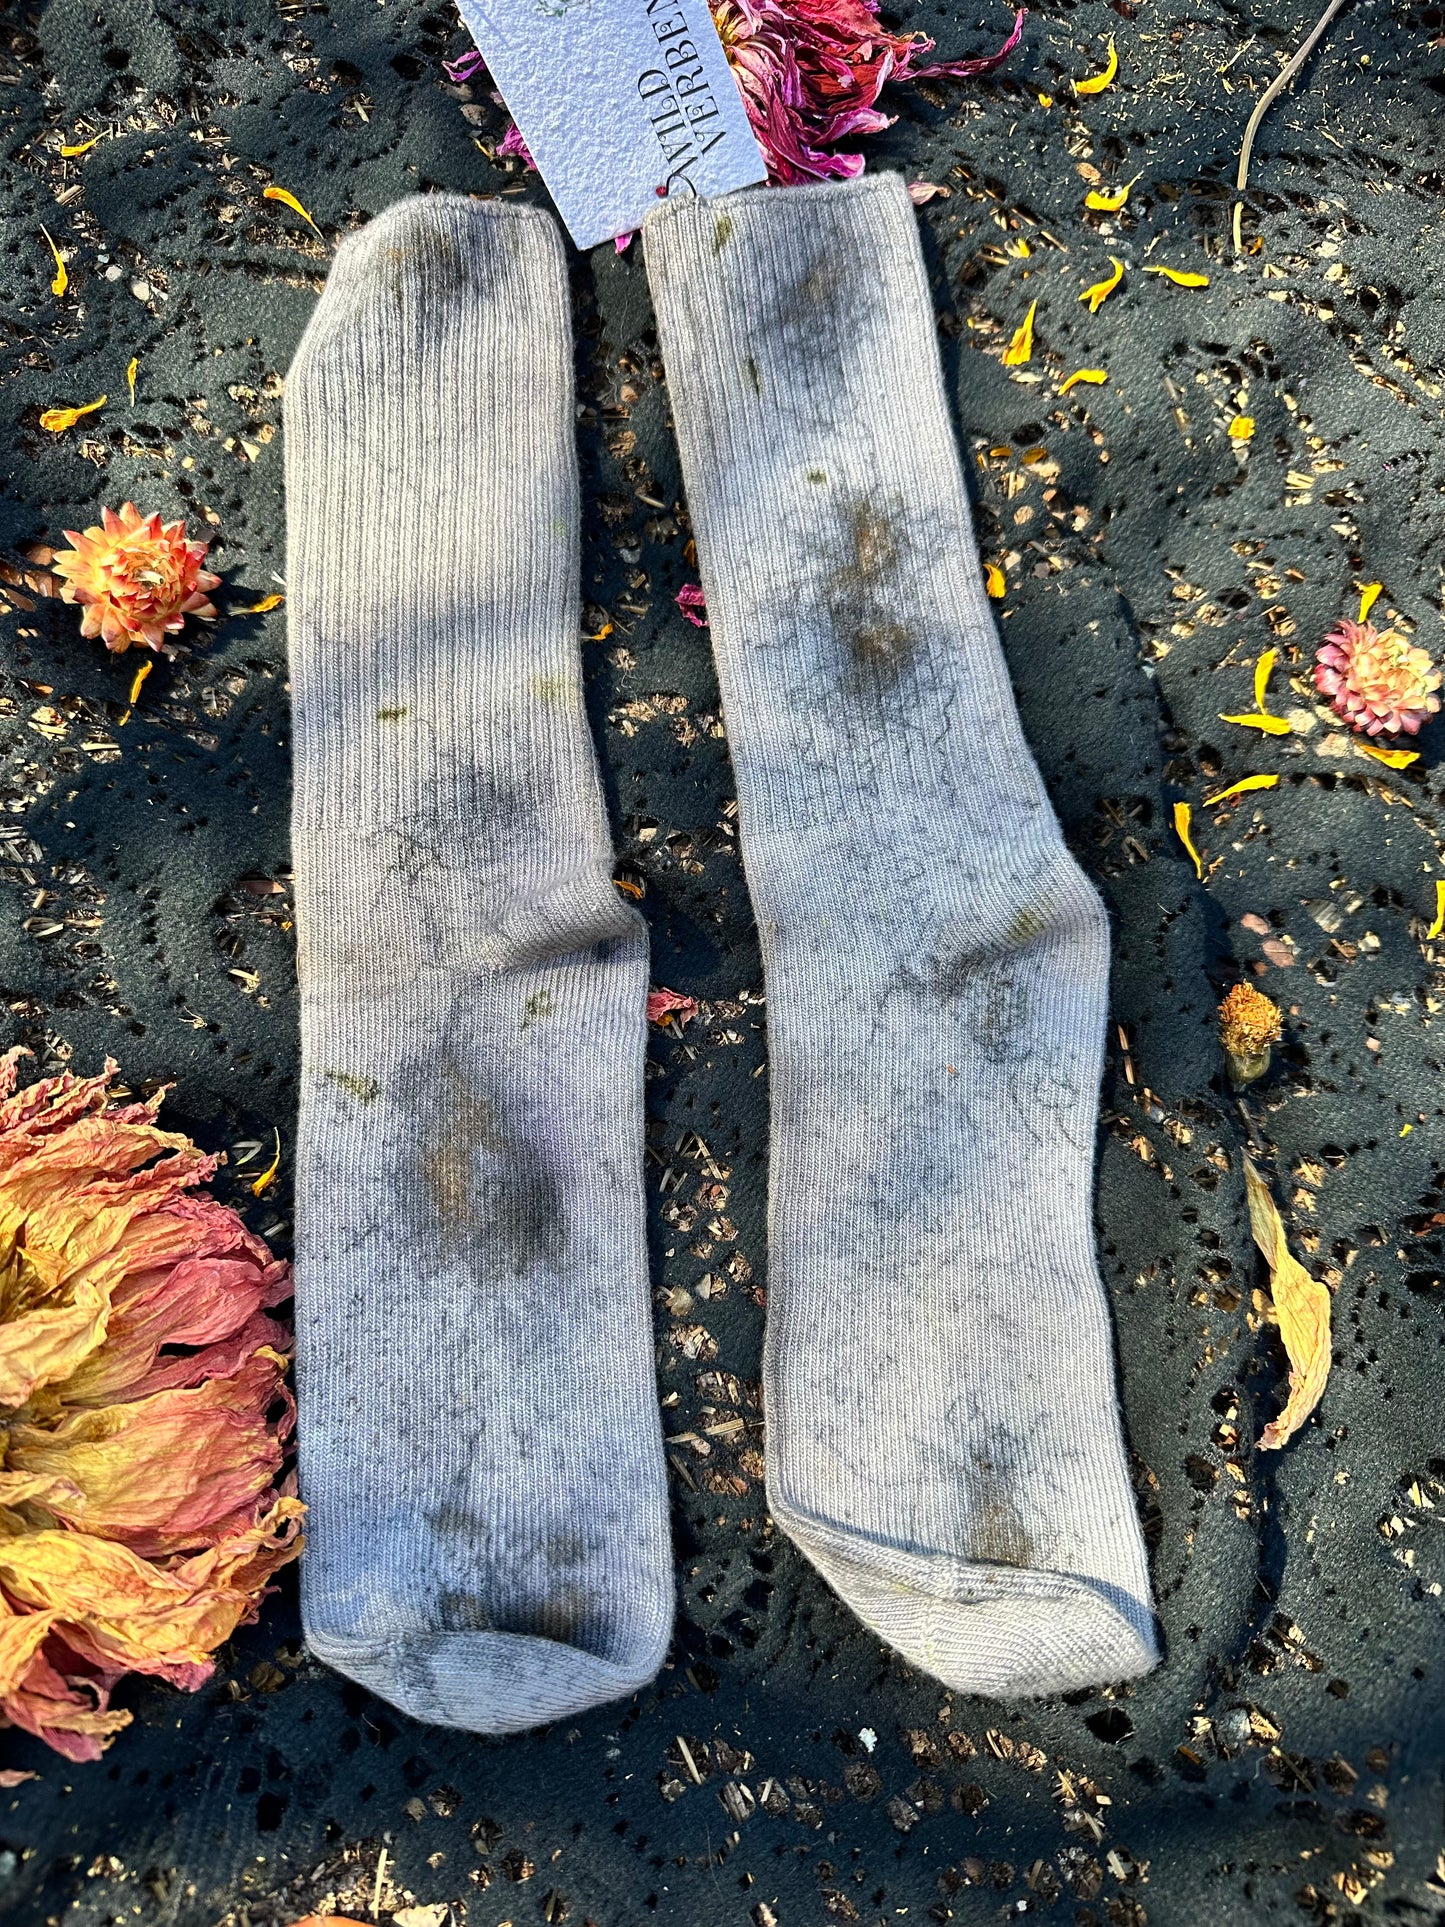 Plant magick socks